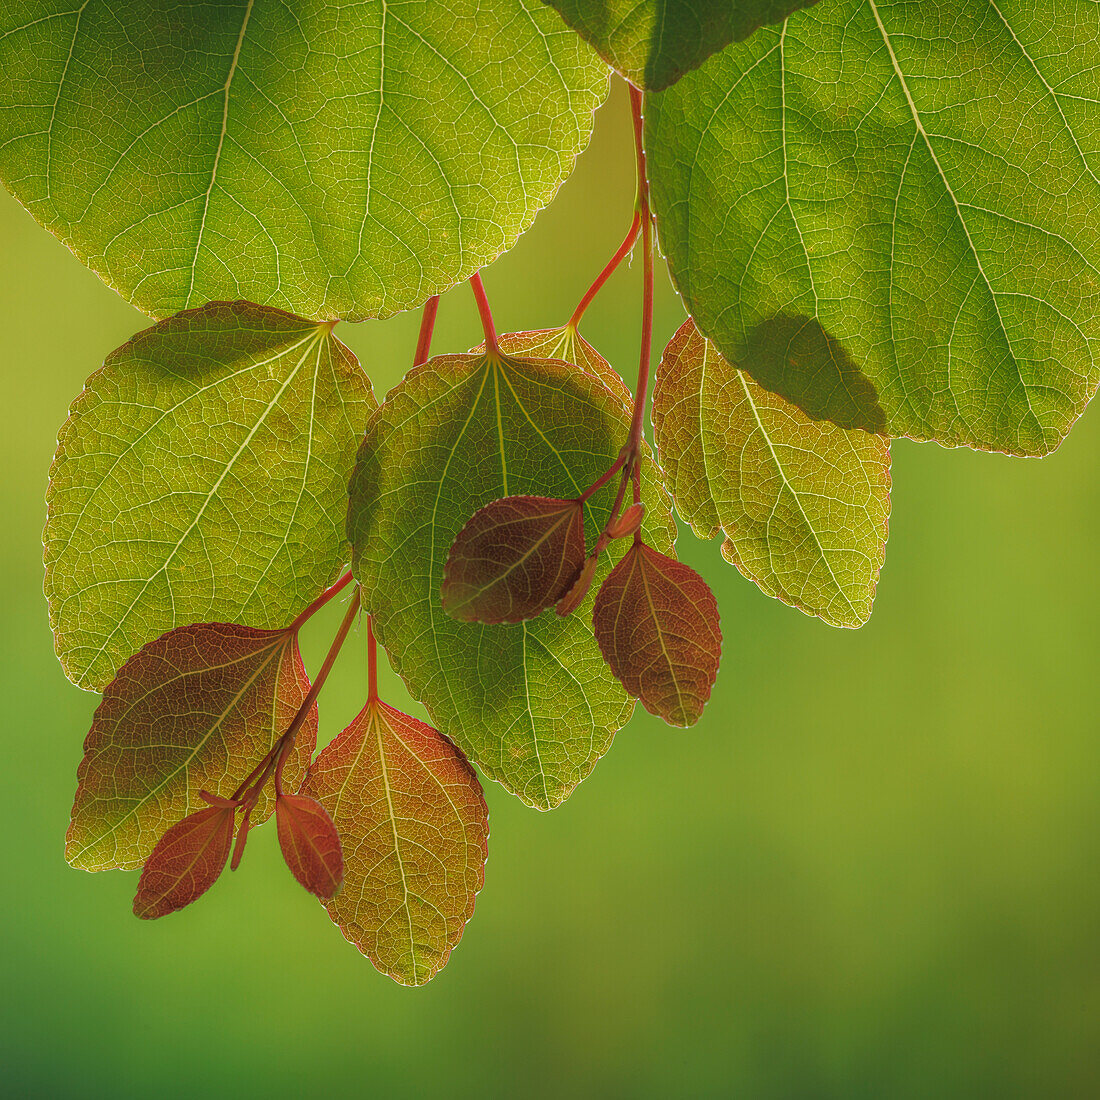 USA, Washington, Seabeck. Close-up of katsura tree leaves in spring.